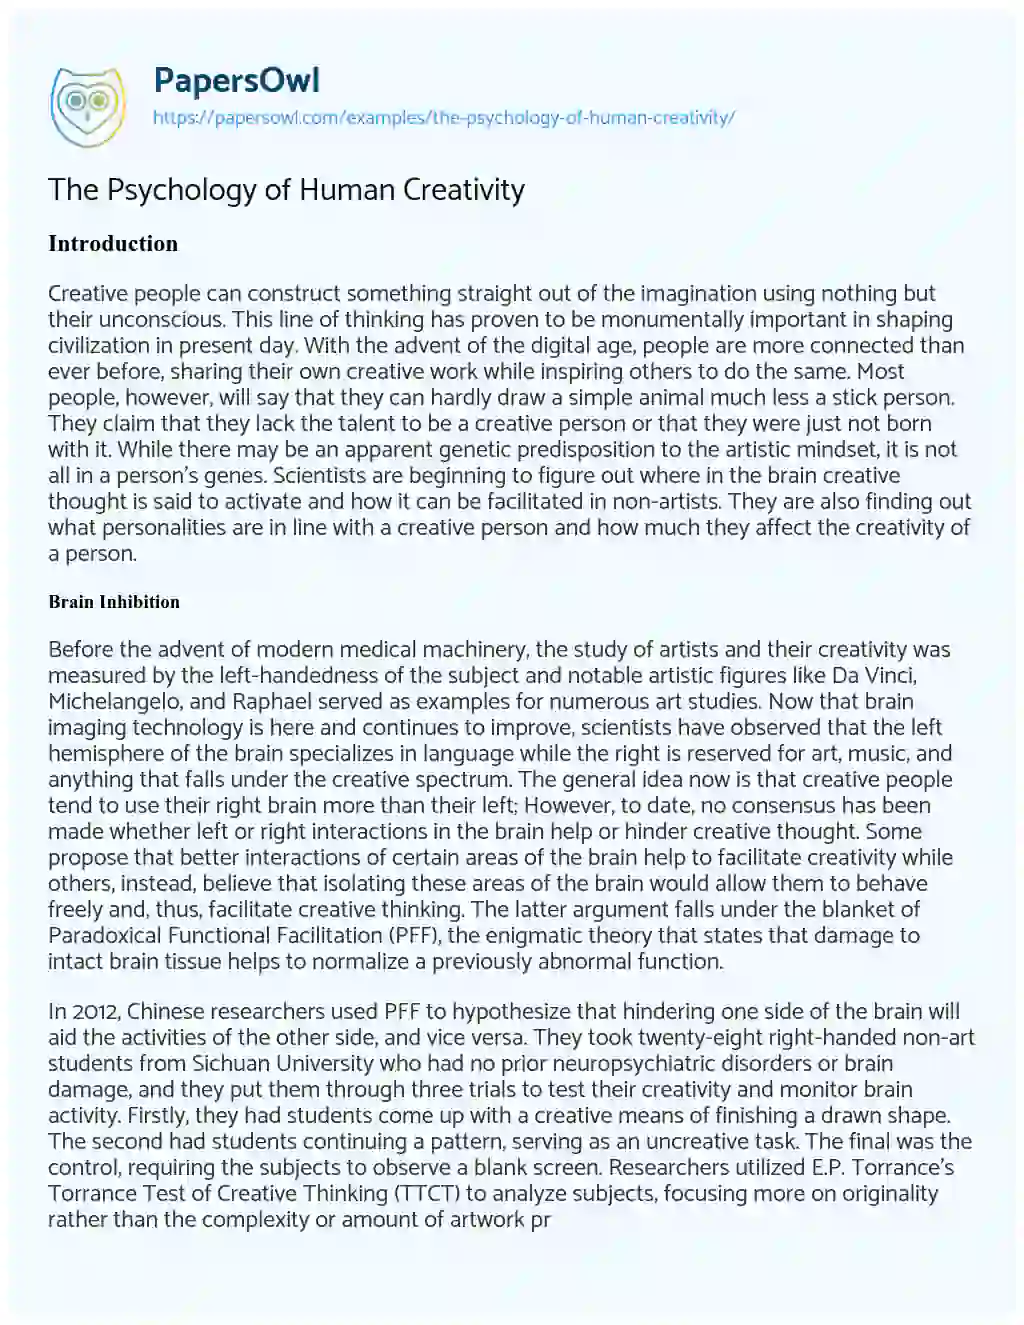 The Psychology of Human Creativity essay